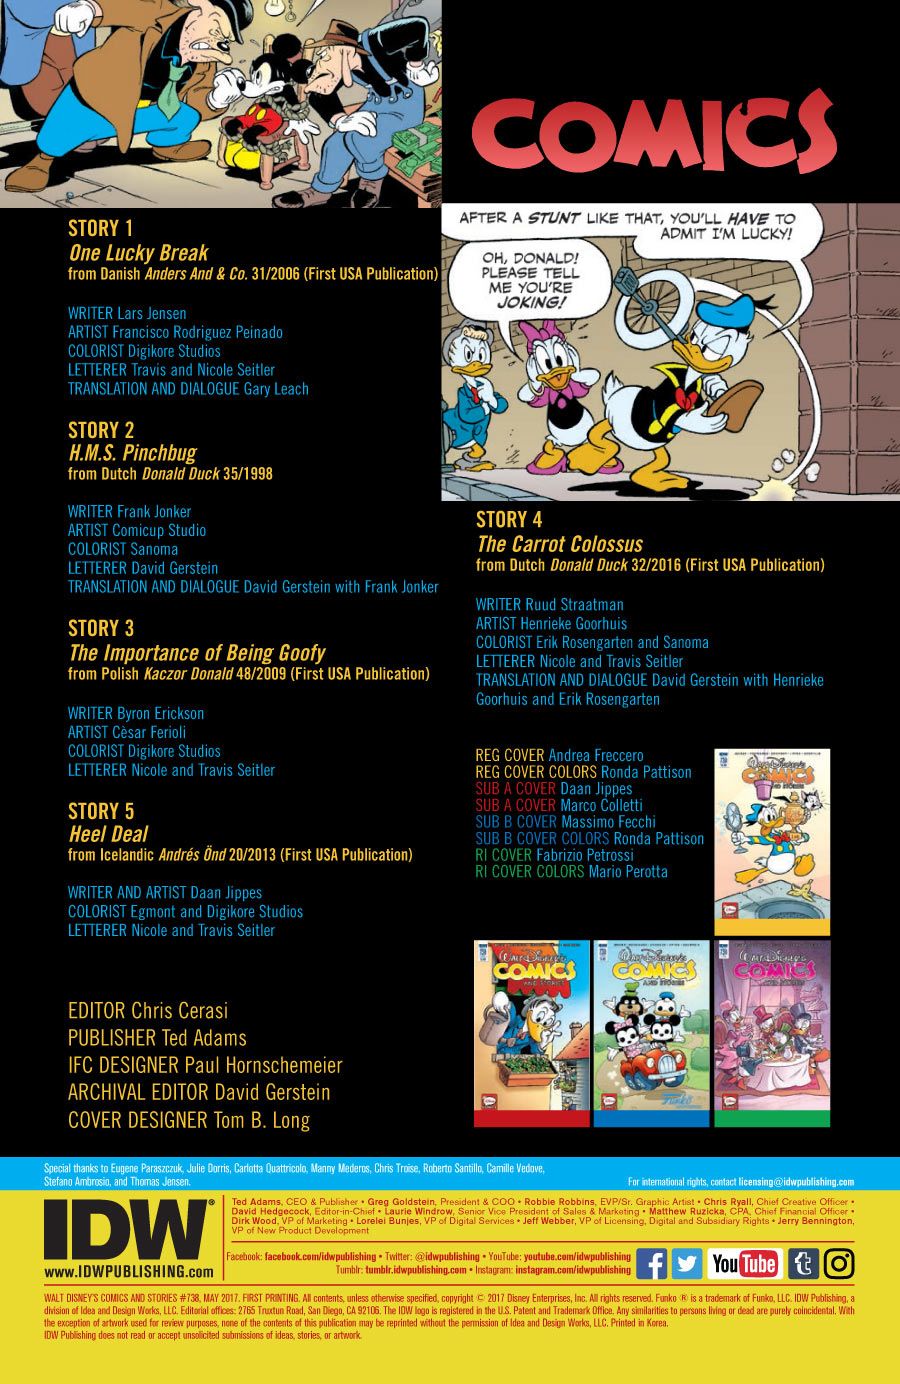 33% off Guide! Walt Disney's Comics and Stories 518 9.2 NM-